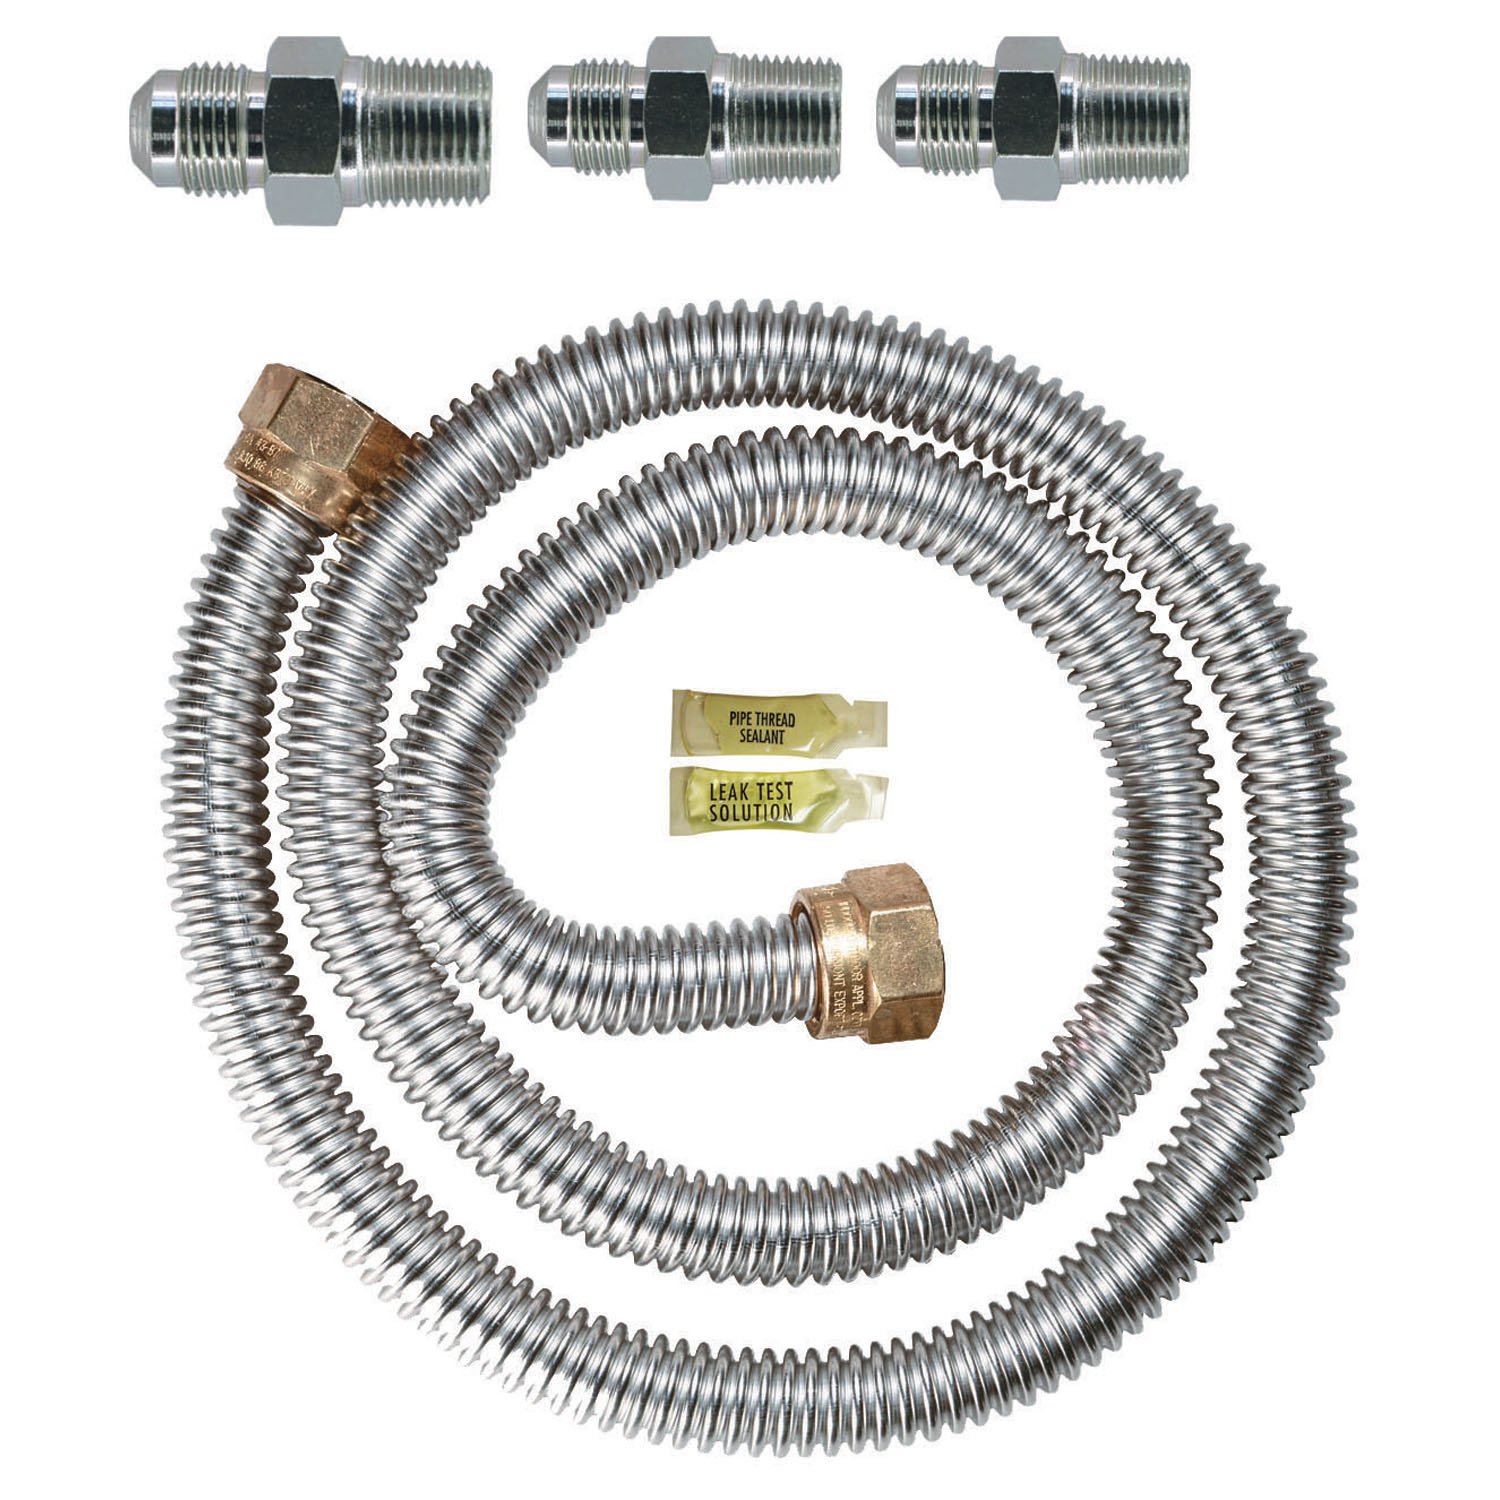 Dormont Supr-Safe Gas Appliance Connector Kit - 5/8 In. OD (1/2 In. ID) 1/2 In. MIP X 1/2 In. MIP X 3/4 In. MIP X 48 In. Length Uncoated, (0145811) 30-3131KIT-48B, Silver